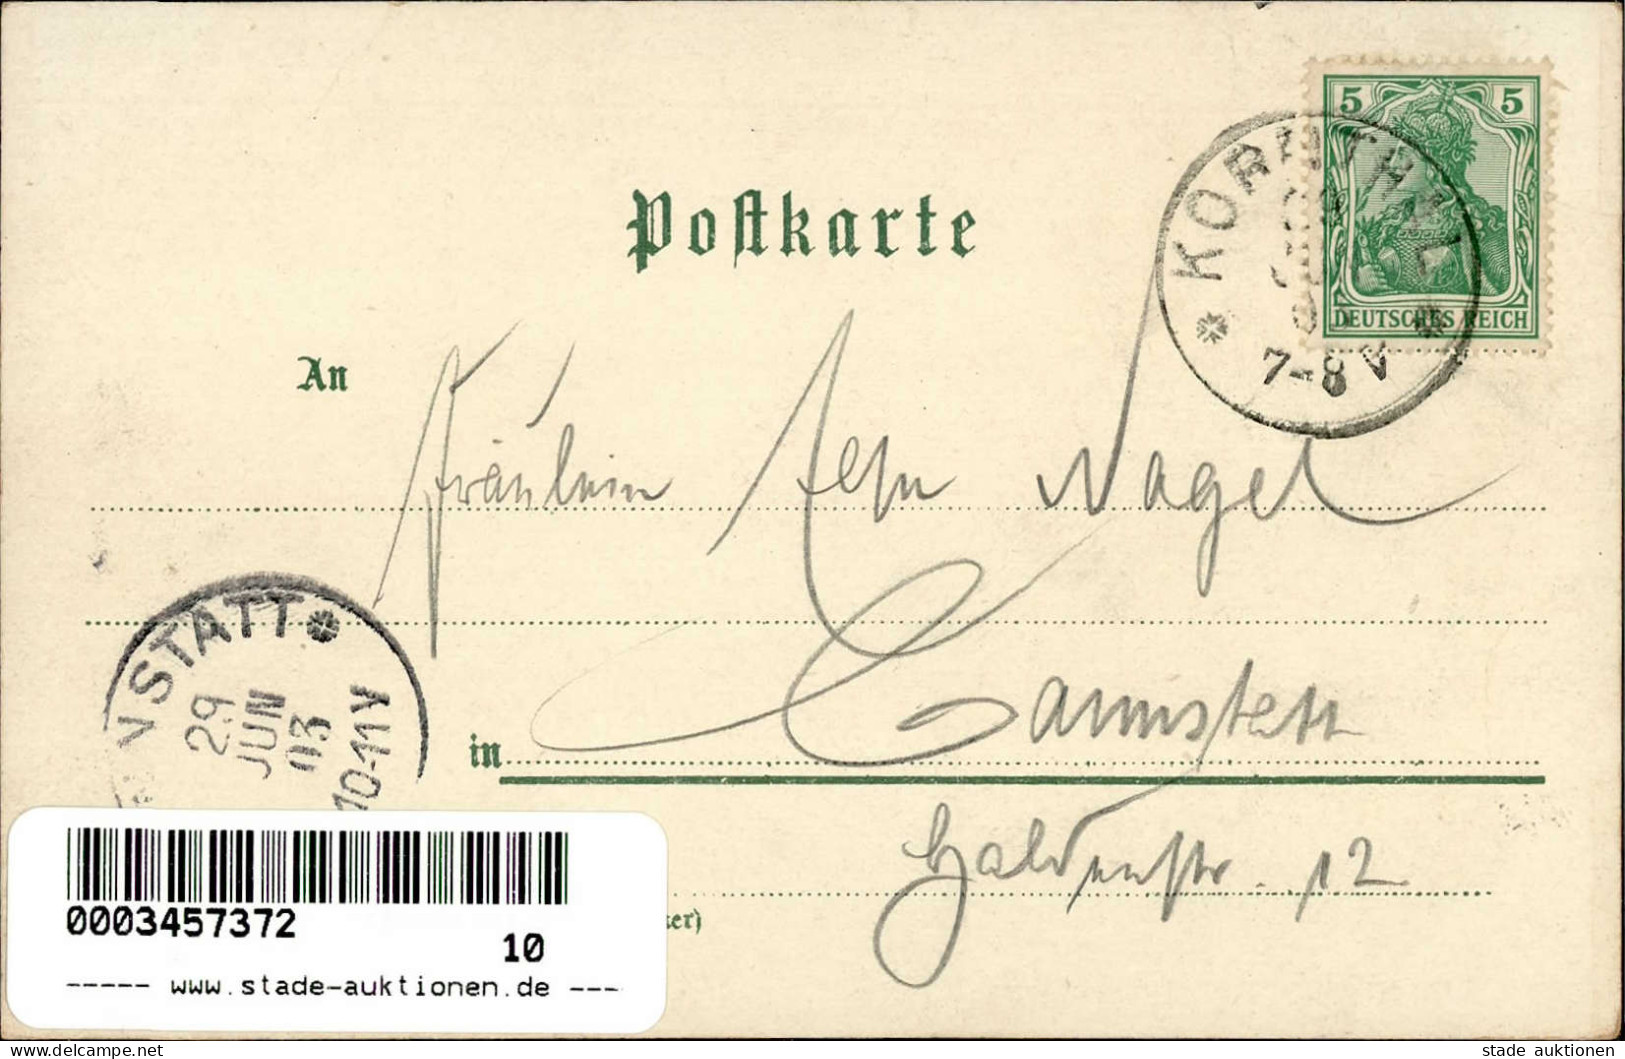 Korntal (7015) Töchterinstitut Knabeninstitut 1903 II (Bugspur) - Autres & Non Classés